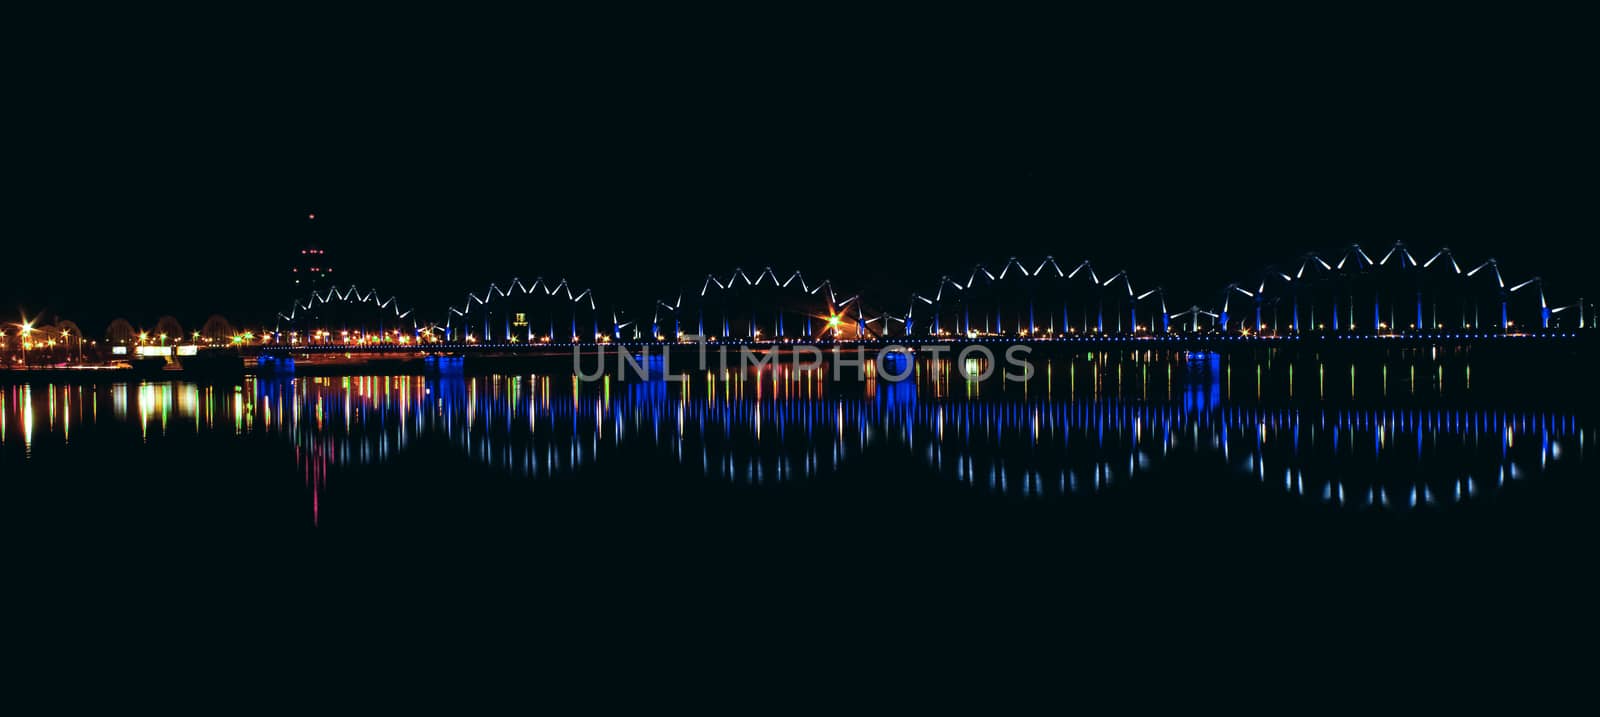 Illuminated railroad bridge by sengnsp